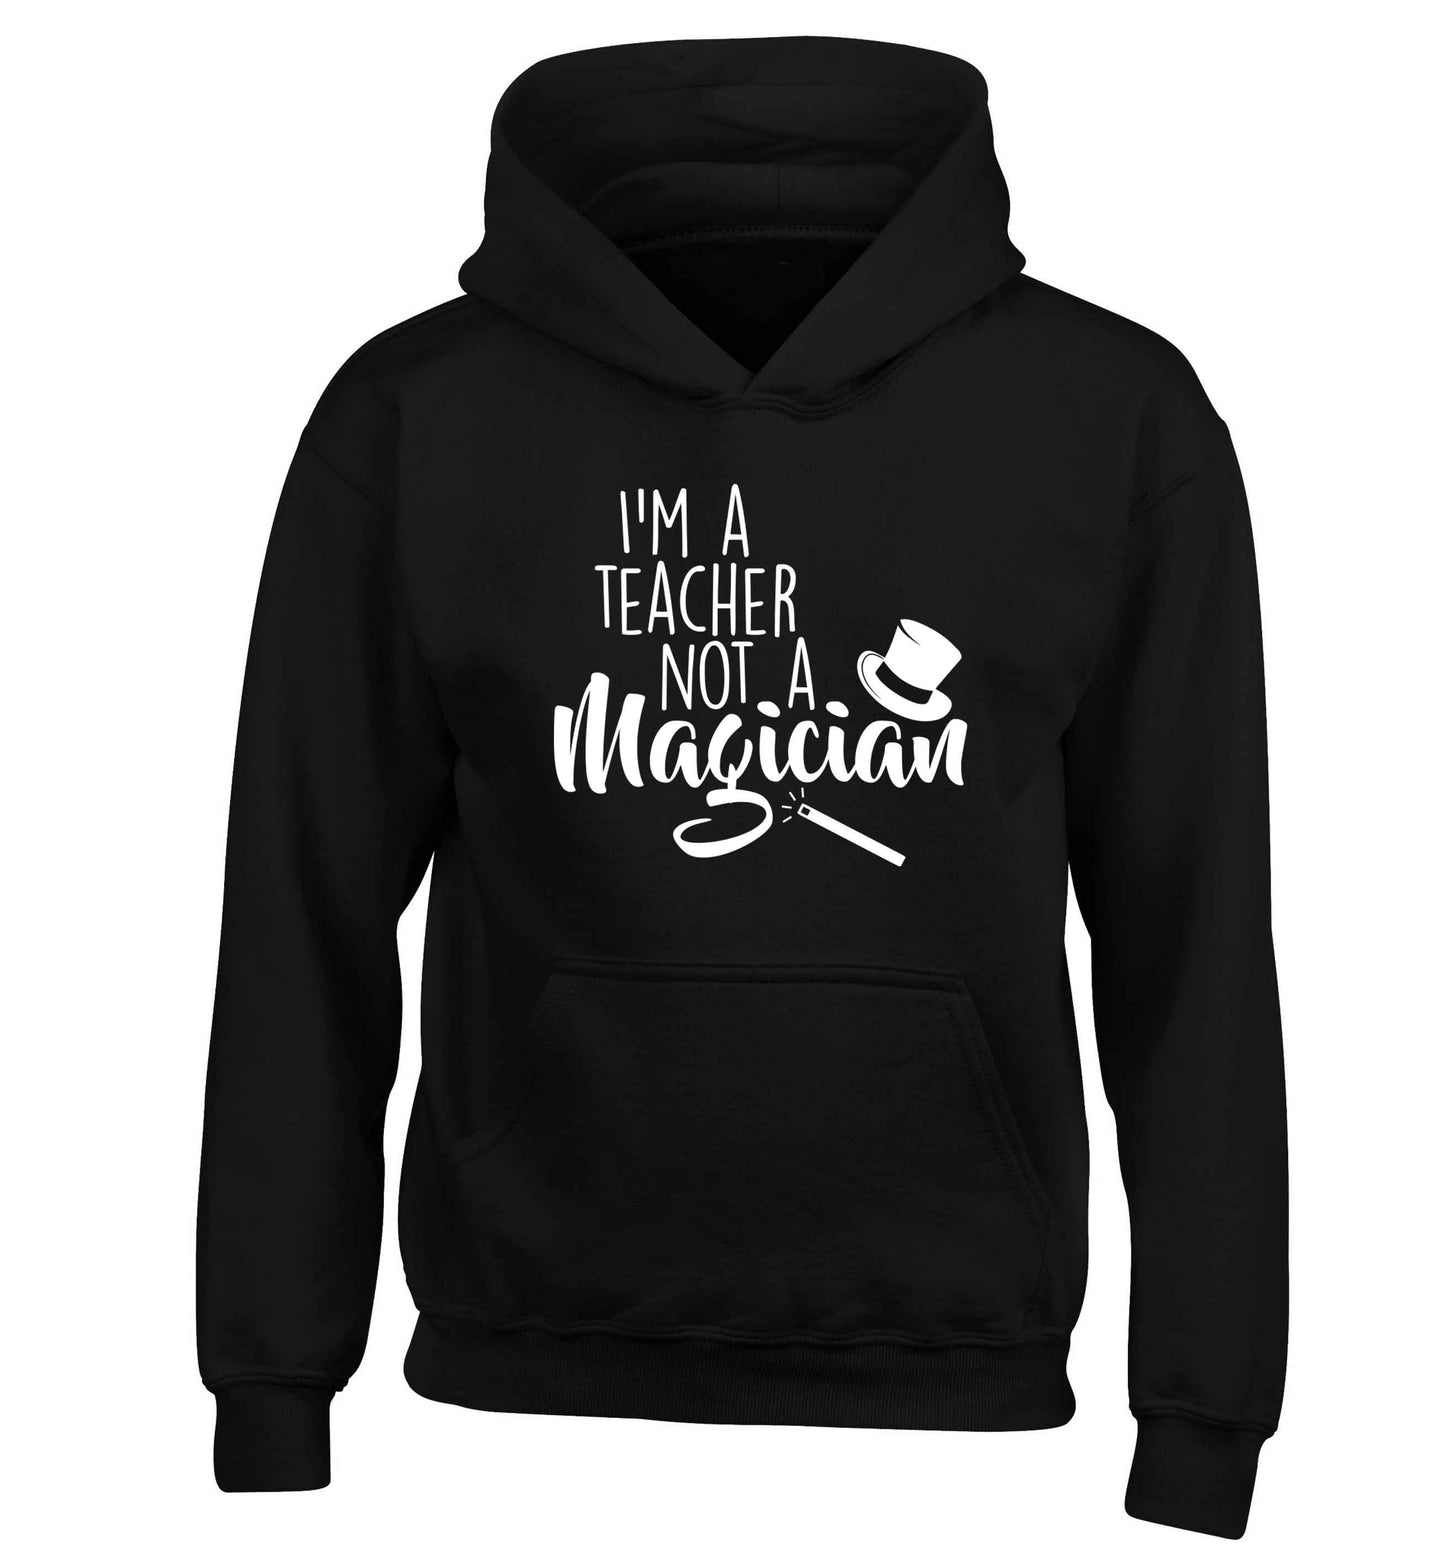 I'm a teacher not a magician children's black hoodie 12-13 Years